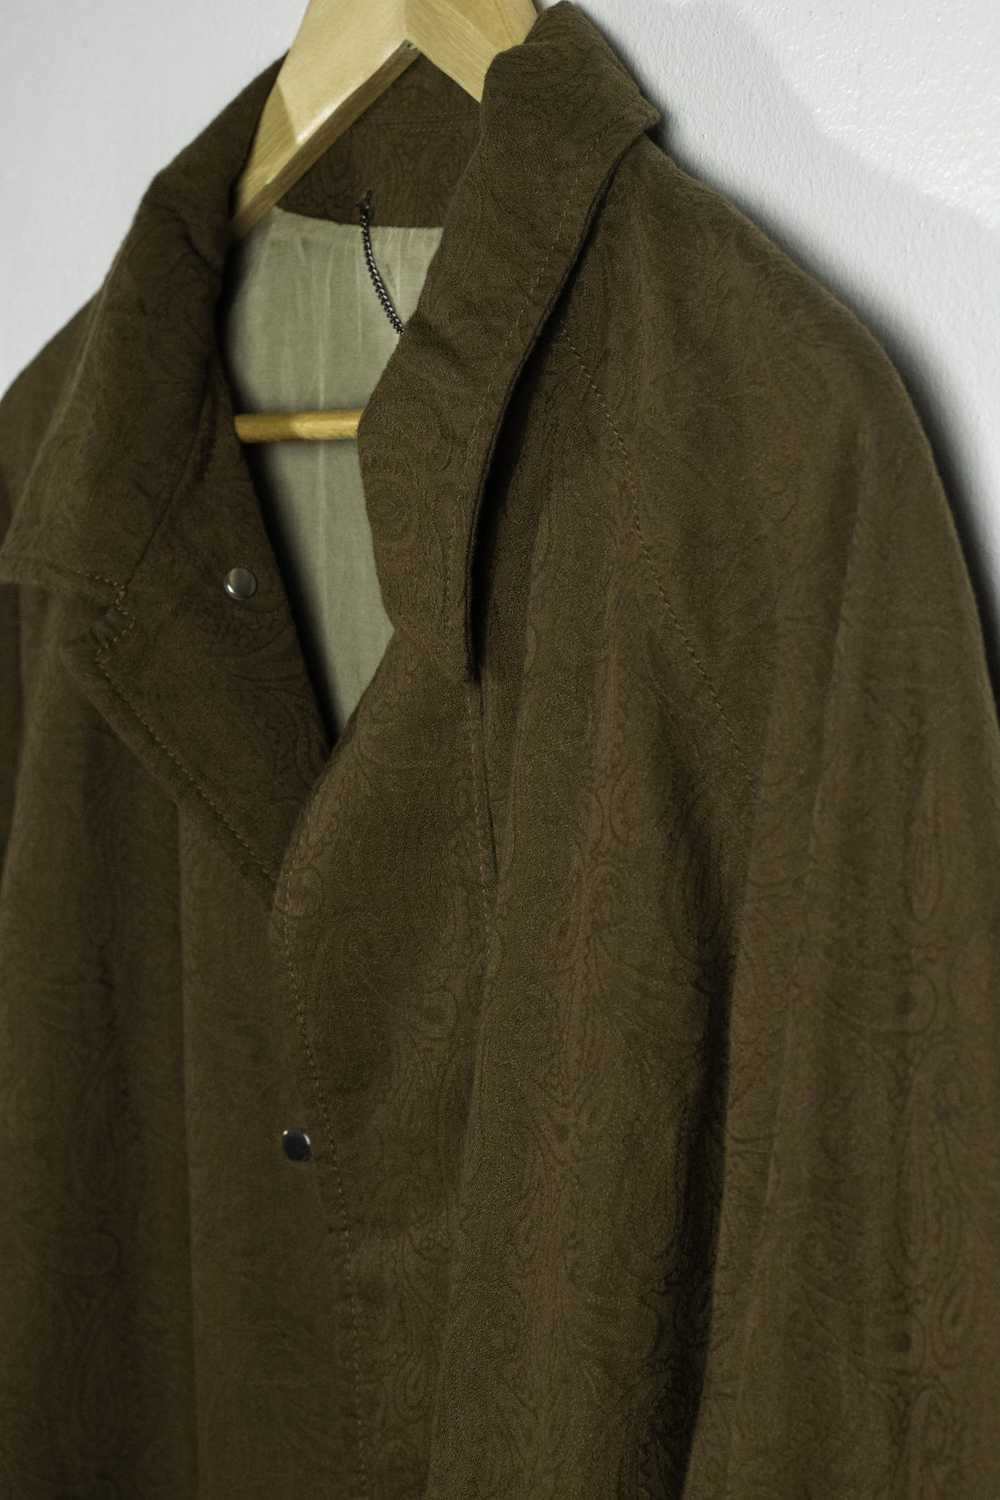 JieDa Jieda Paisley Coat Dark Brown - image 4